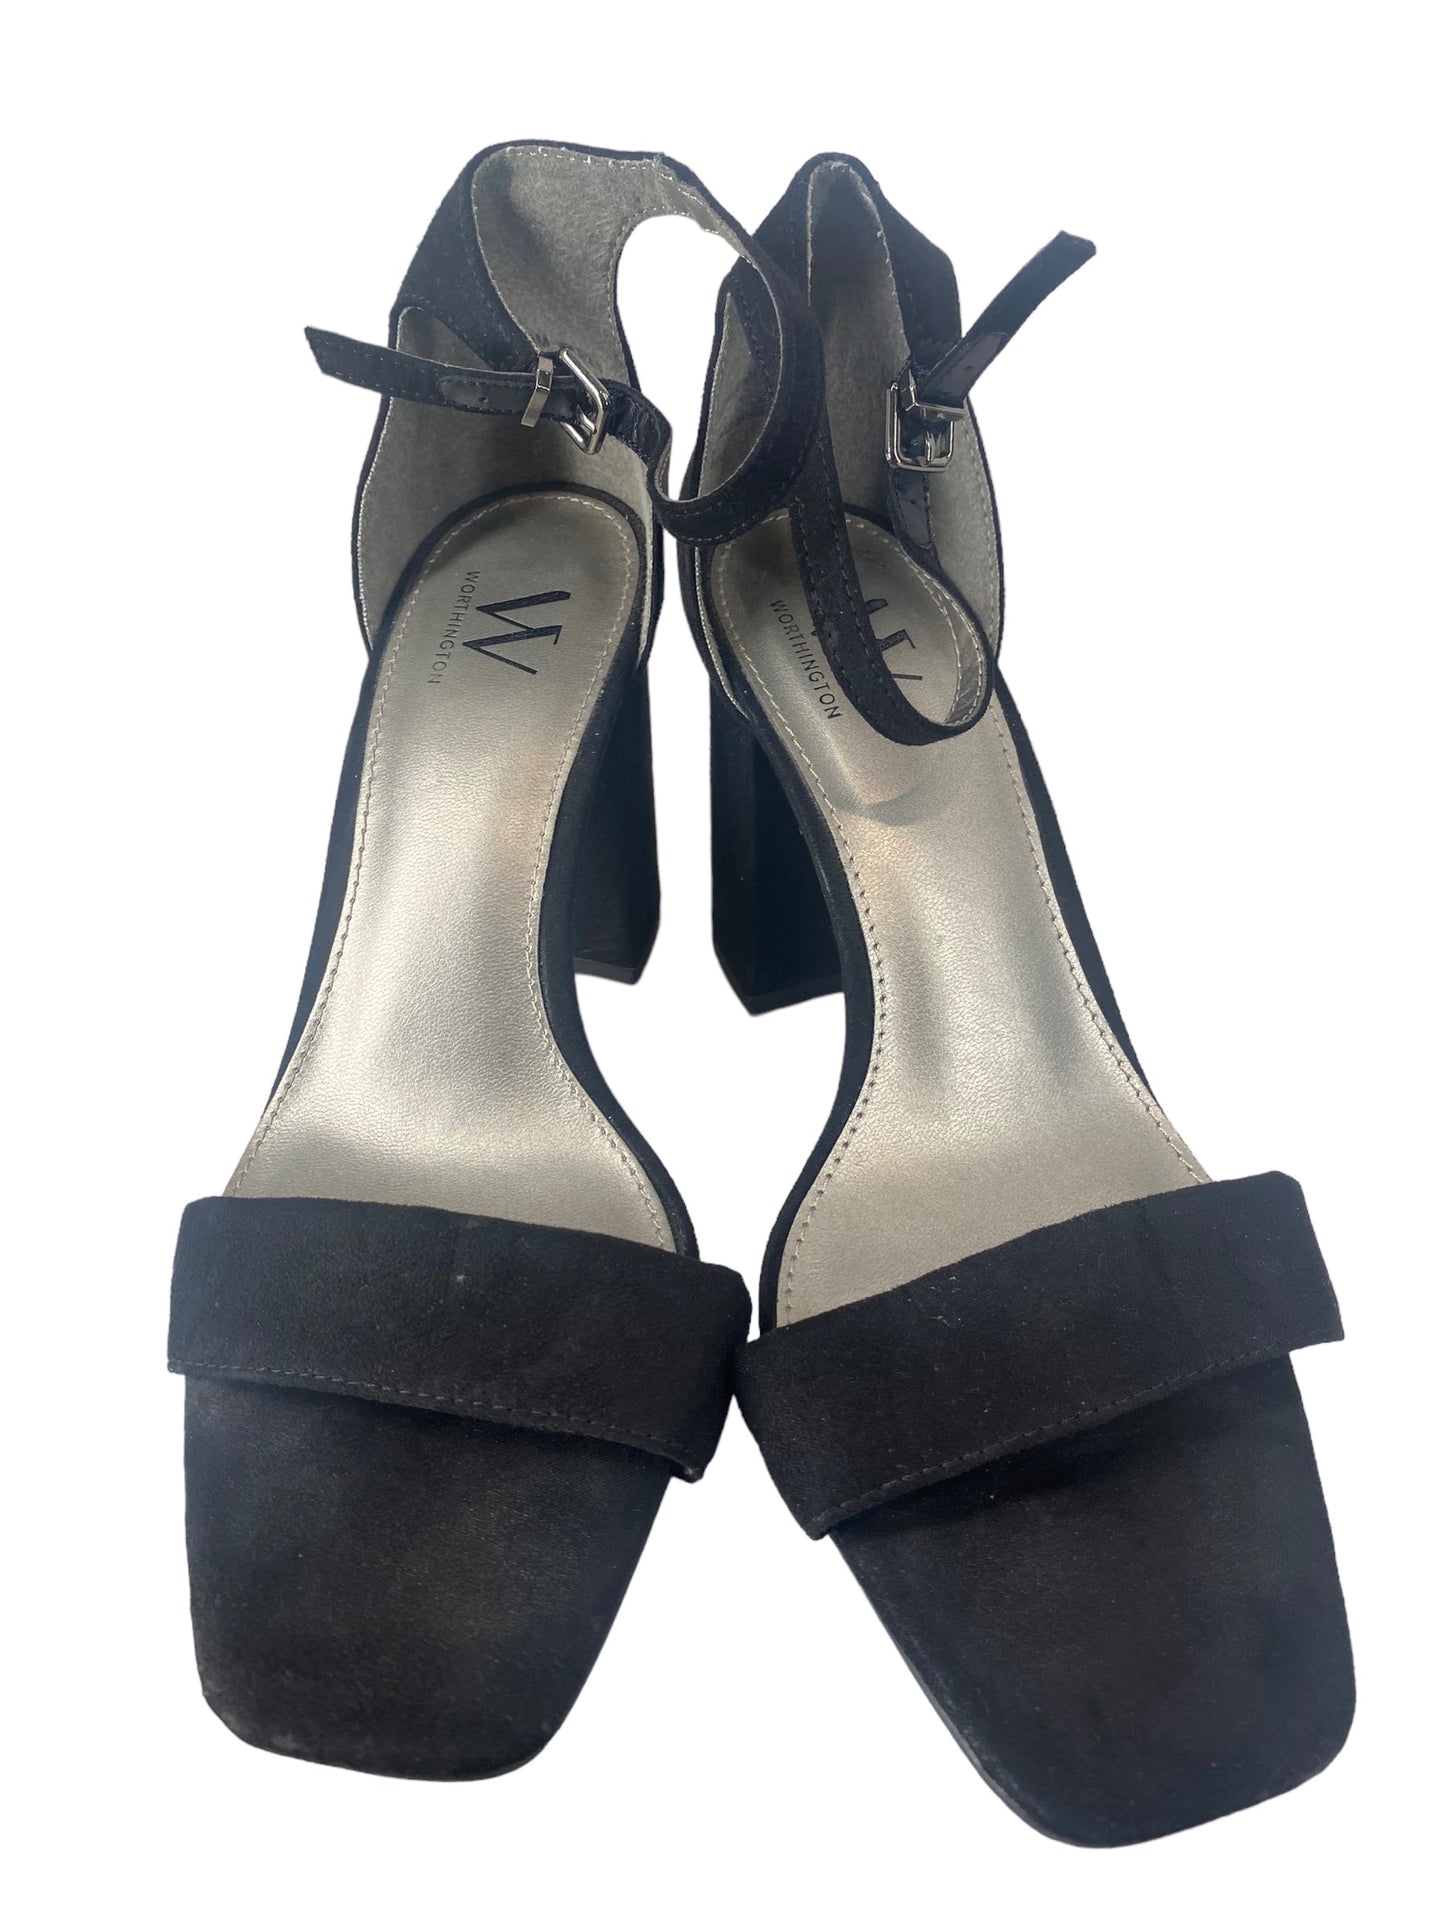 Shoes Heels Block By Worthington  Size: 8.5